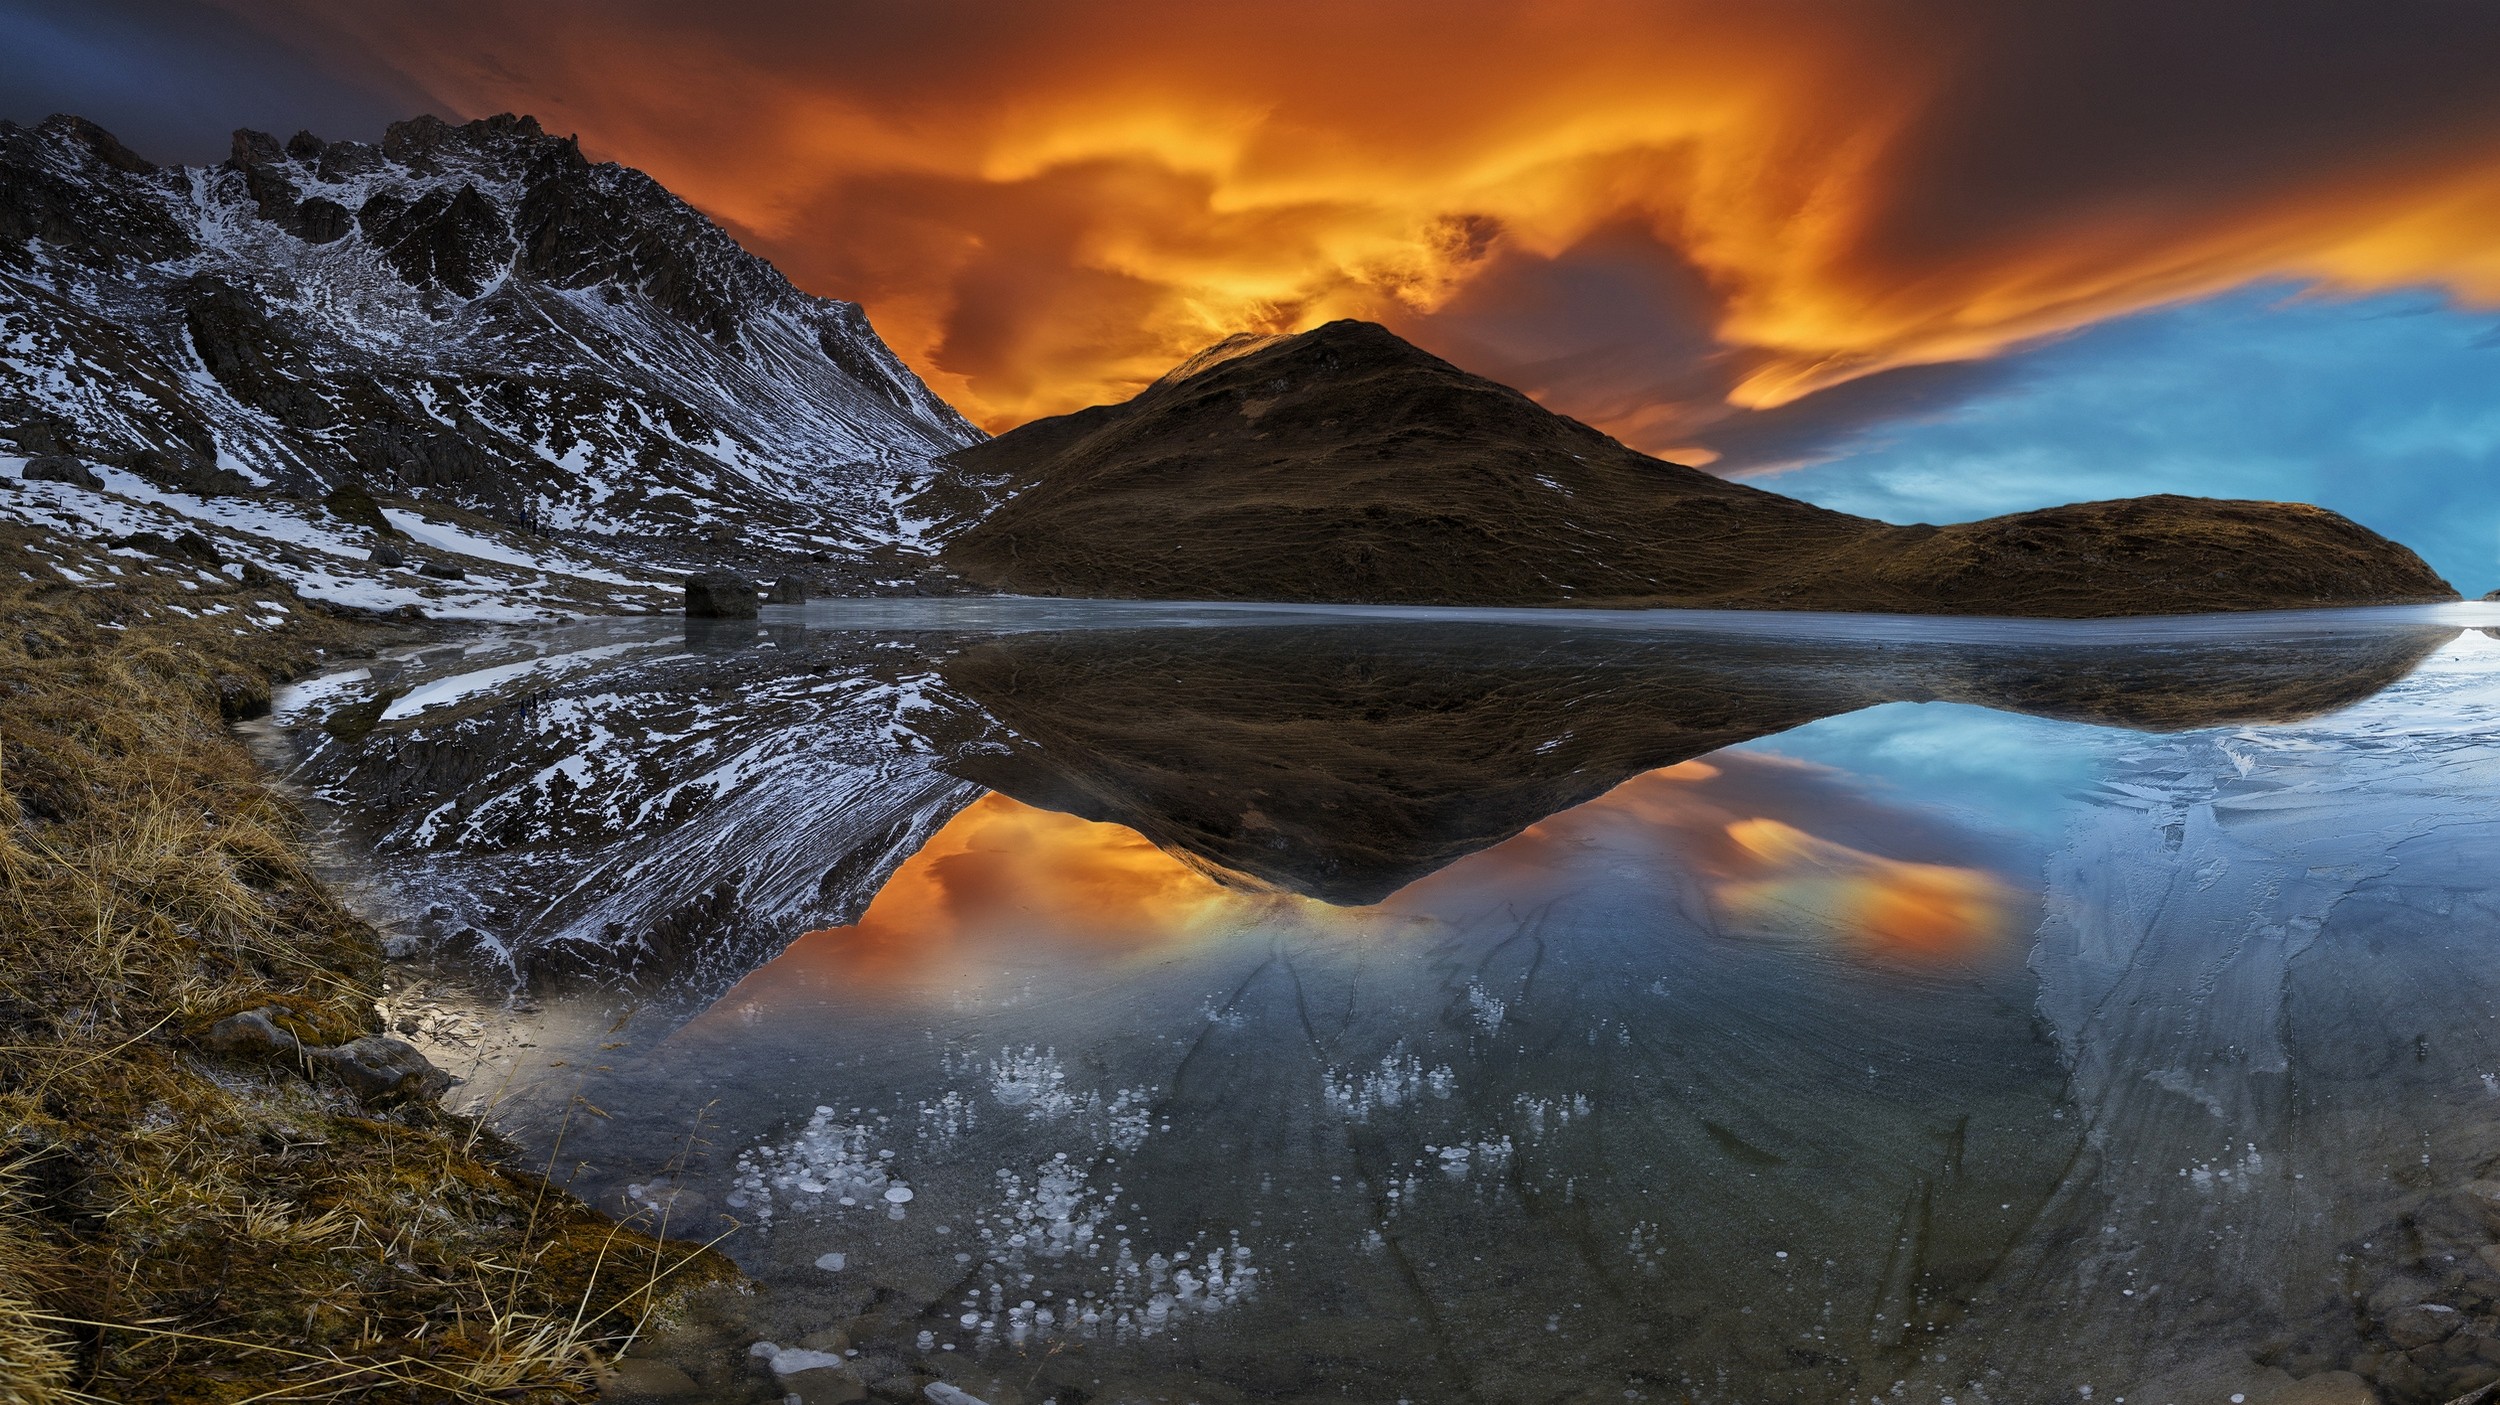 General 2500x1405 landscape lake mountains snow sunset sky clouds reflection Alps France orange sky low light